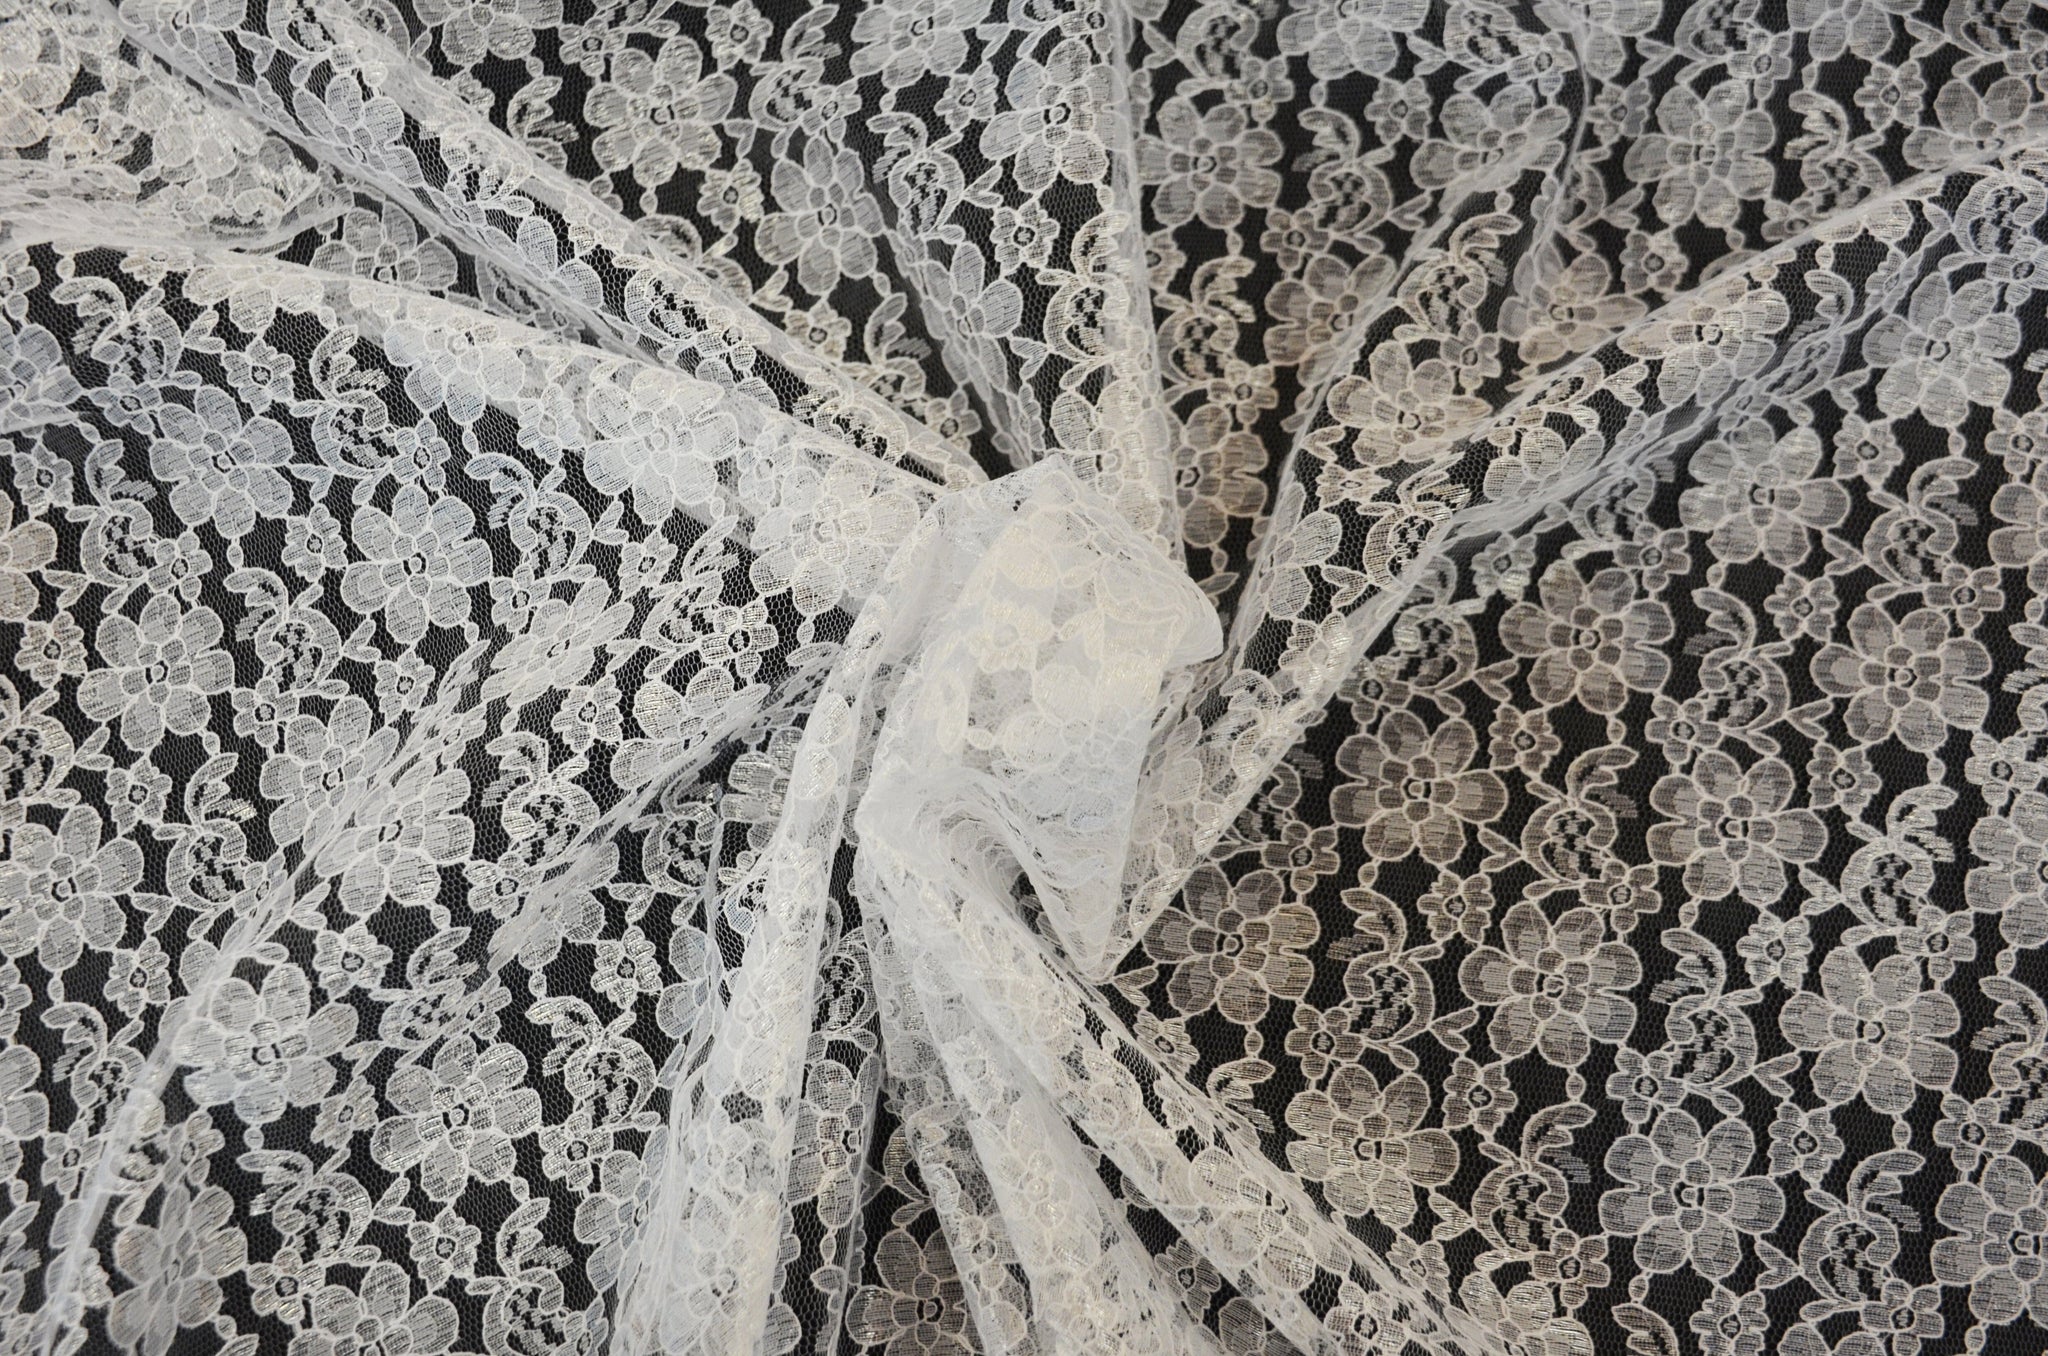 White Raschel Lace Fabric